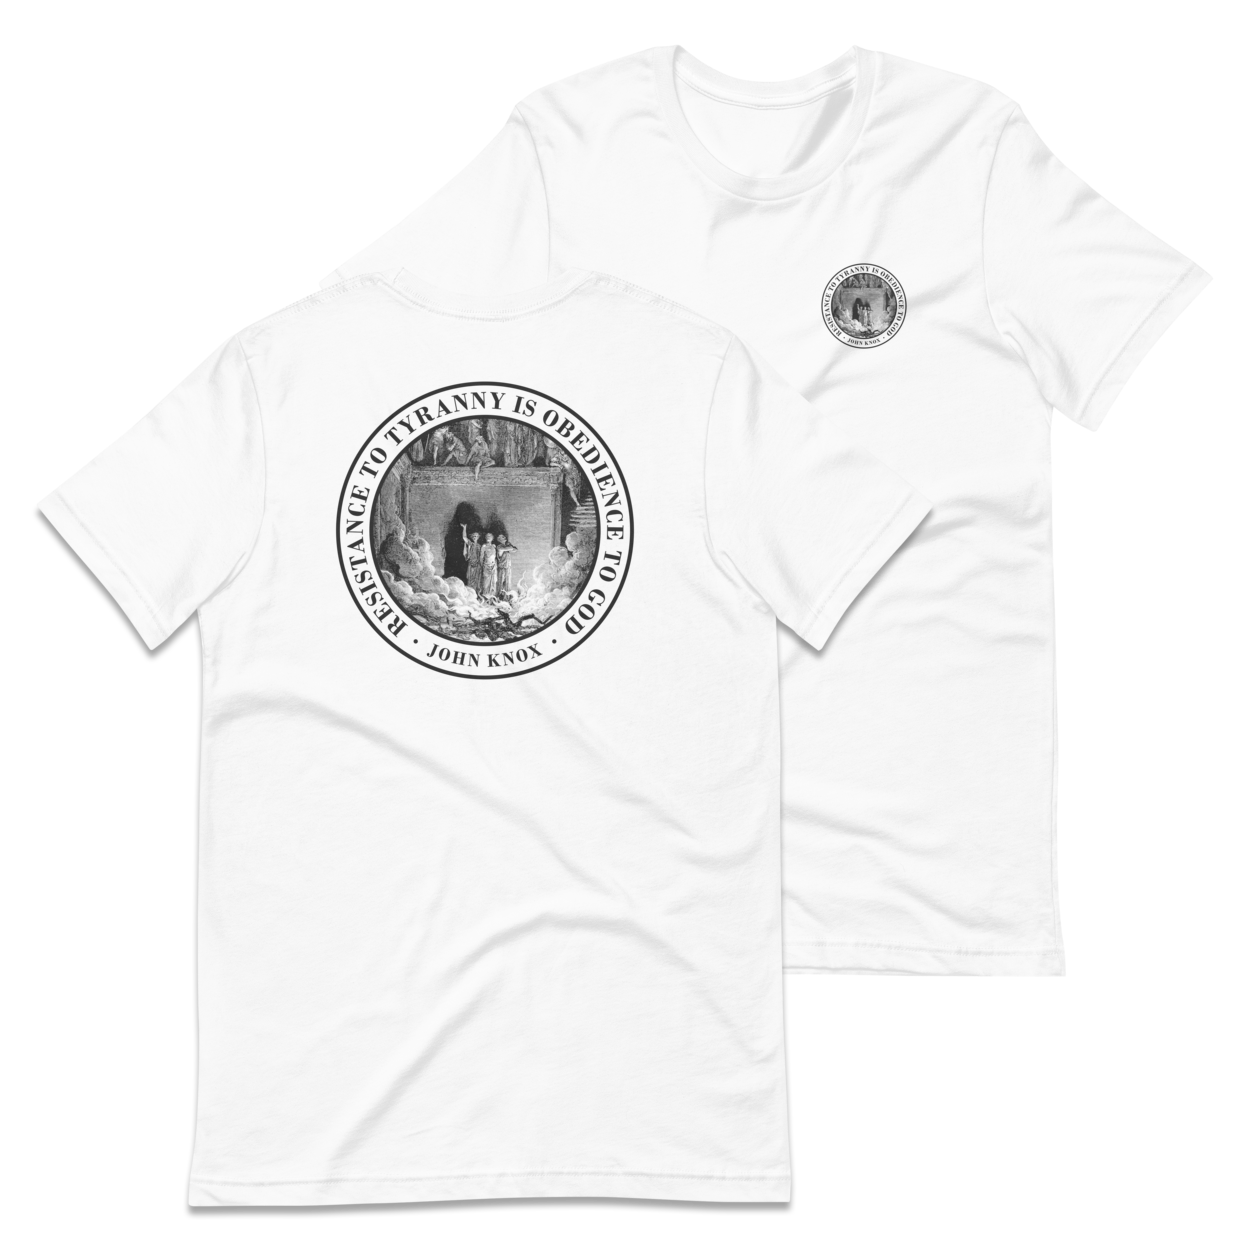 Resist Tyranny T-Shirt - 1689 Designs